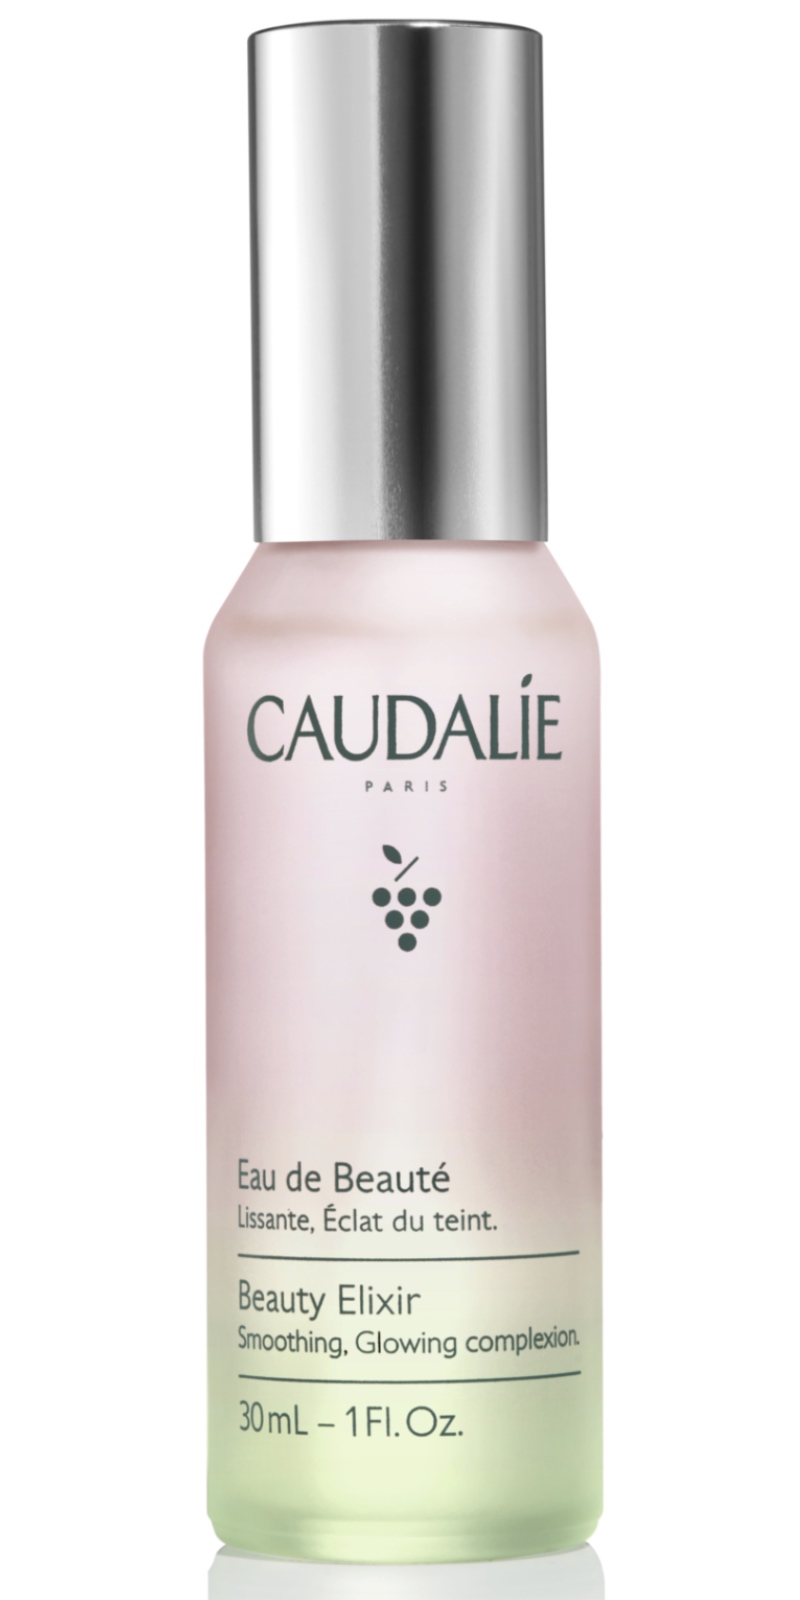 Caudelie Paris Beauty Elixir, $74